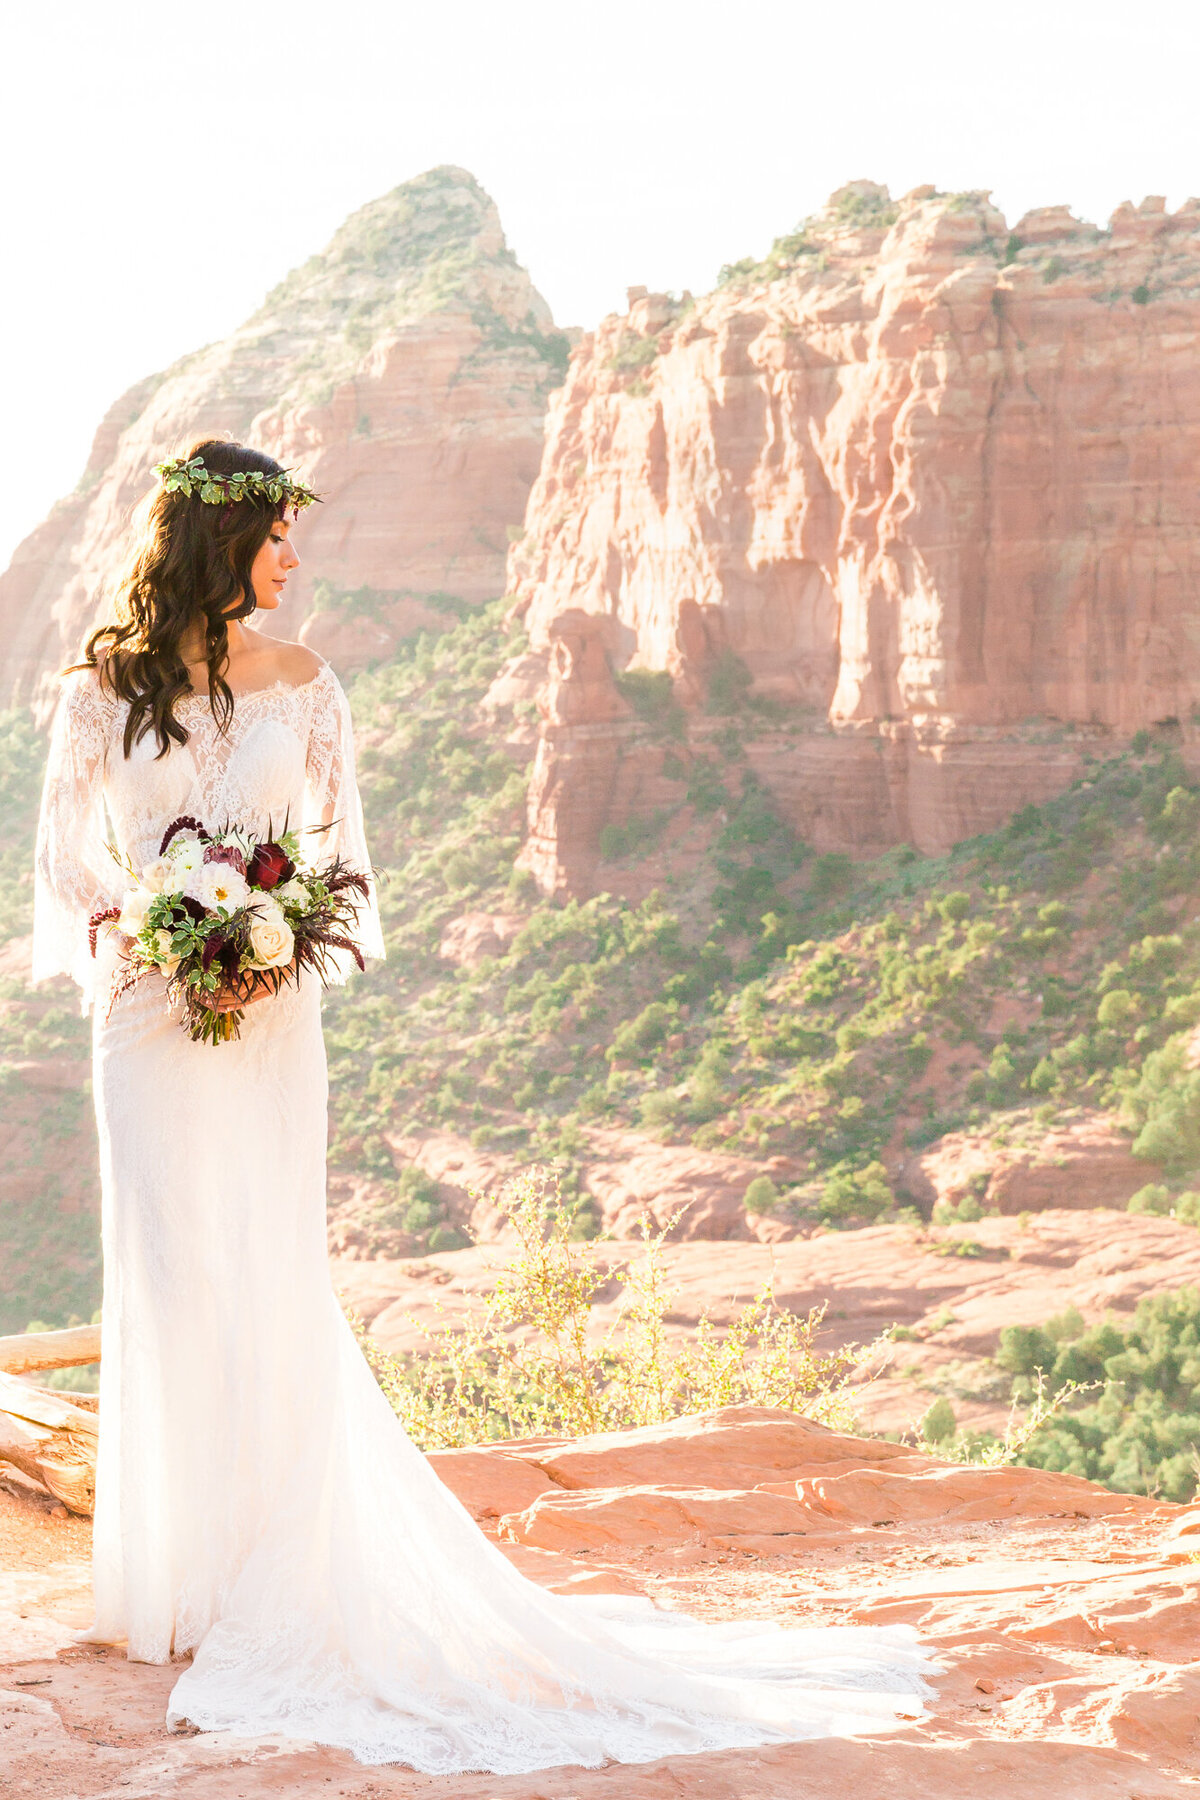 Bridal Portrait Photography - Sedona, Arizona - Bayley Jordan Photography